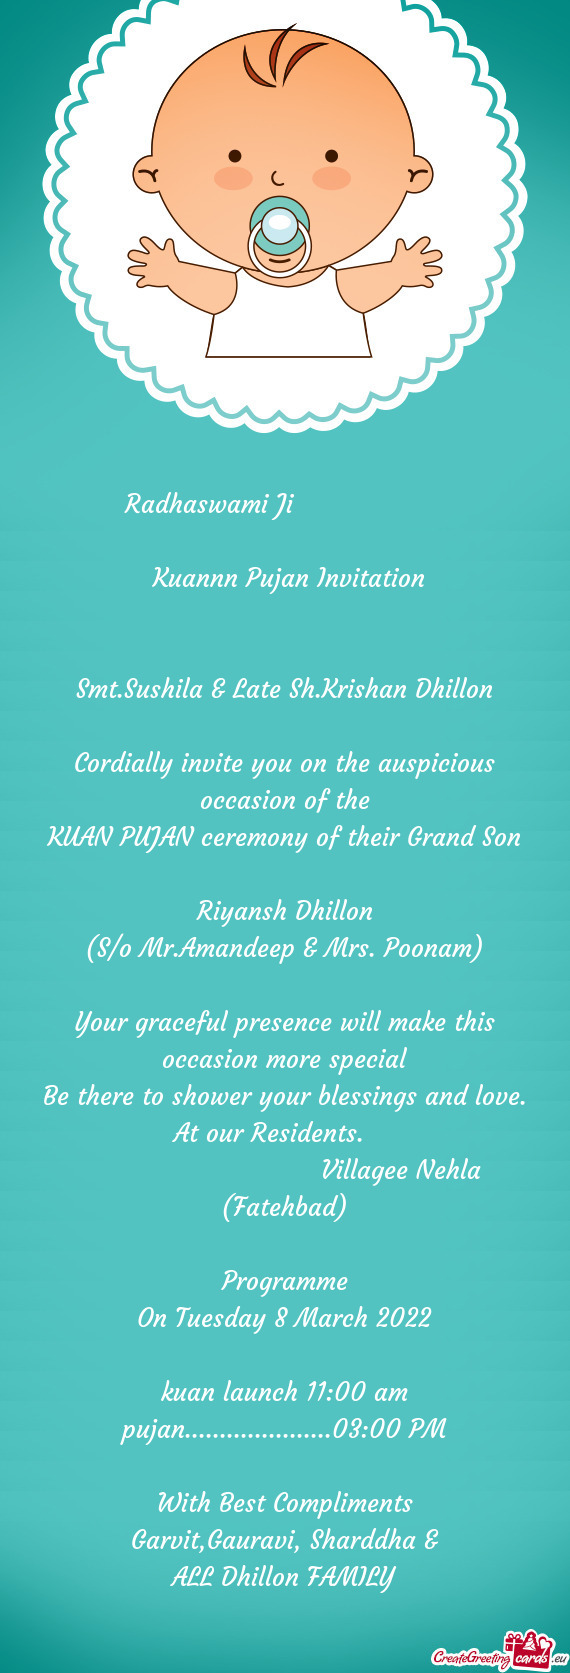 Kuannn Pujan Invitation